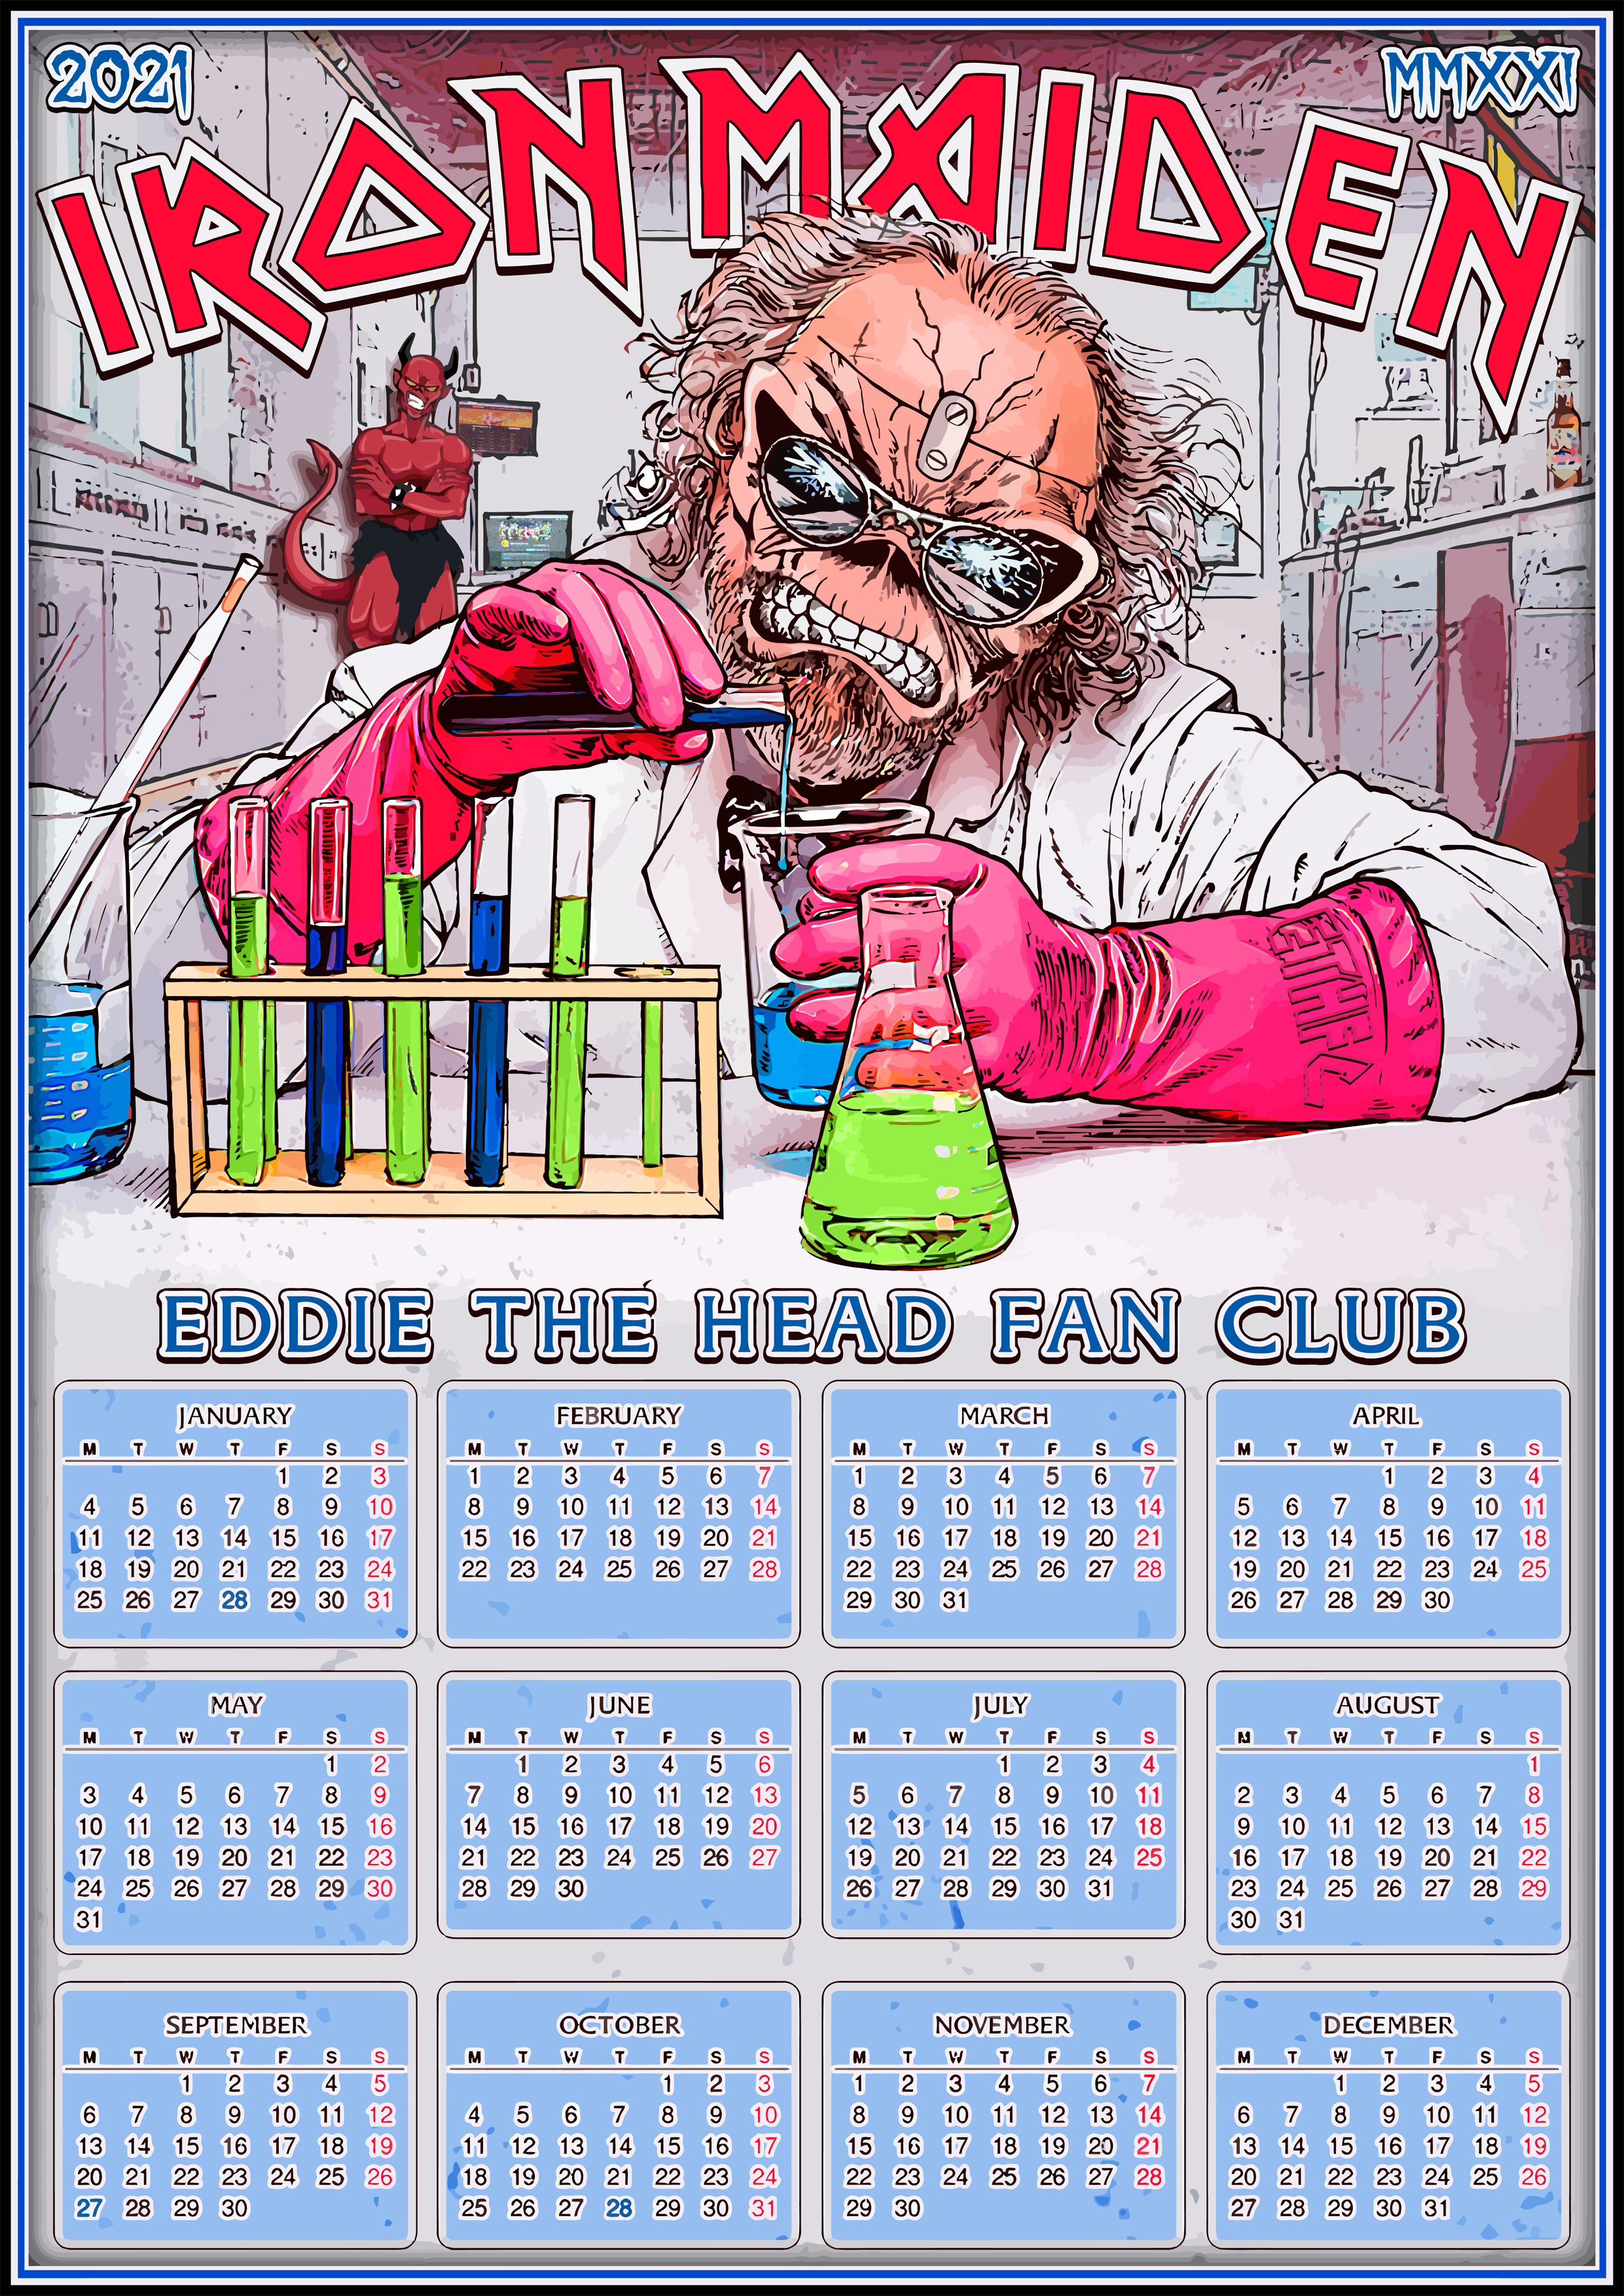 Iron Maiden / ETHFC 2021 Calendar by croatian-crusader on DeviantArt